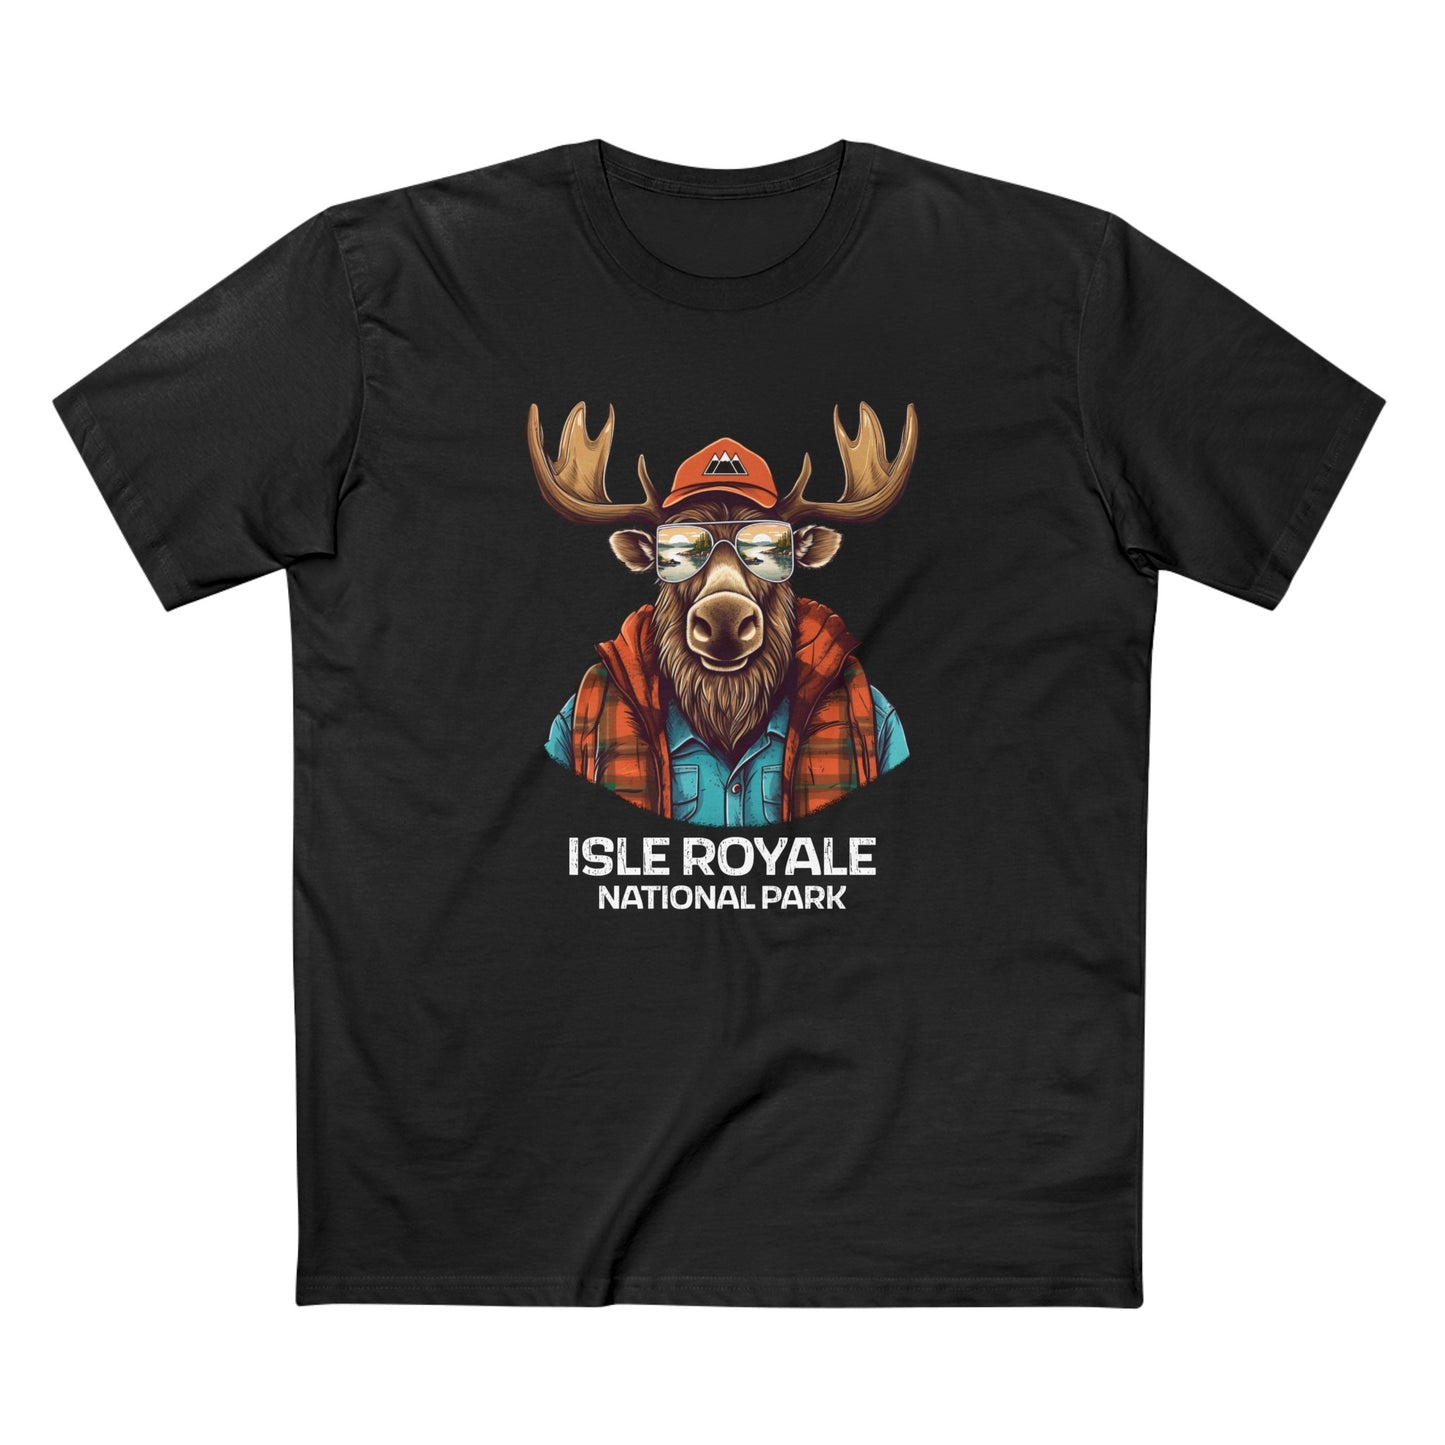 Isle Royale National Park T-Shirt - Cool Moose